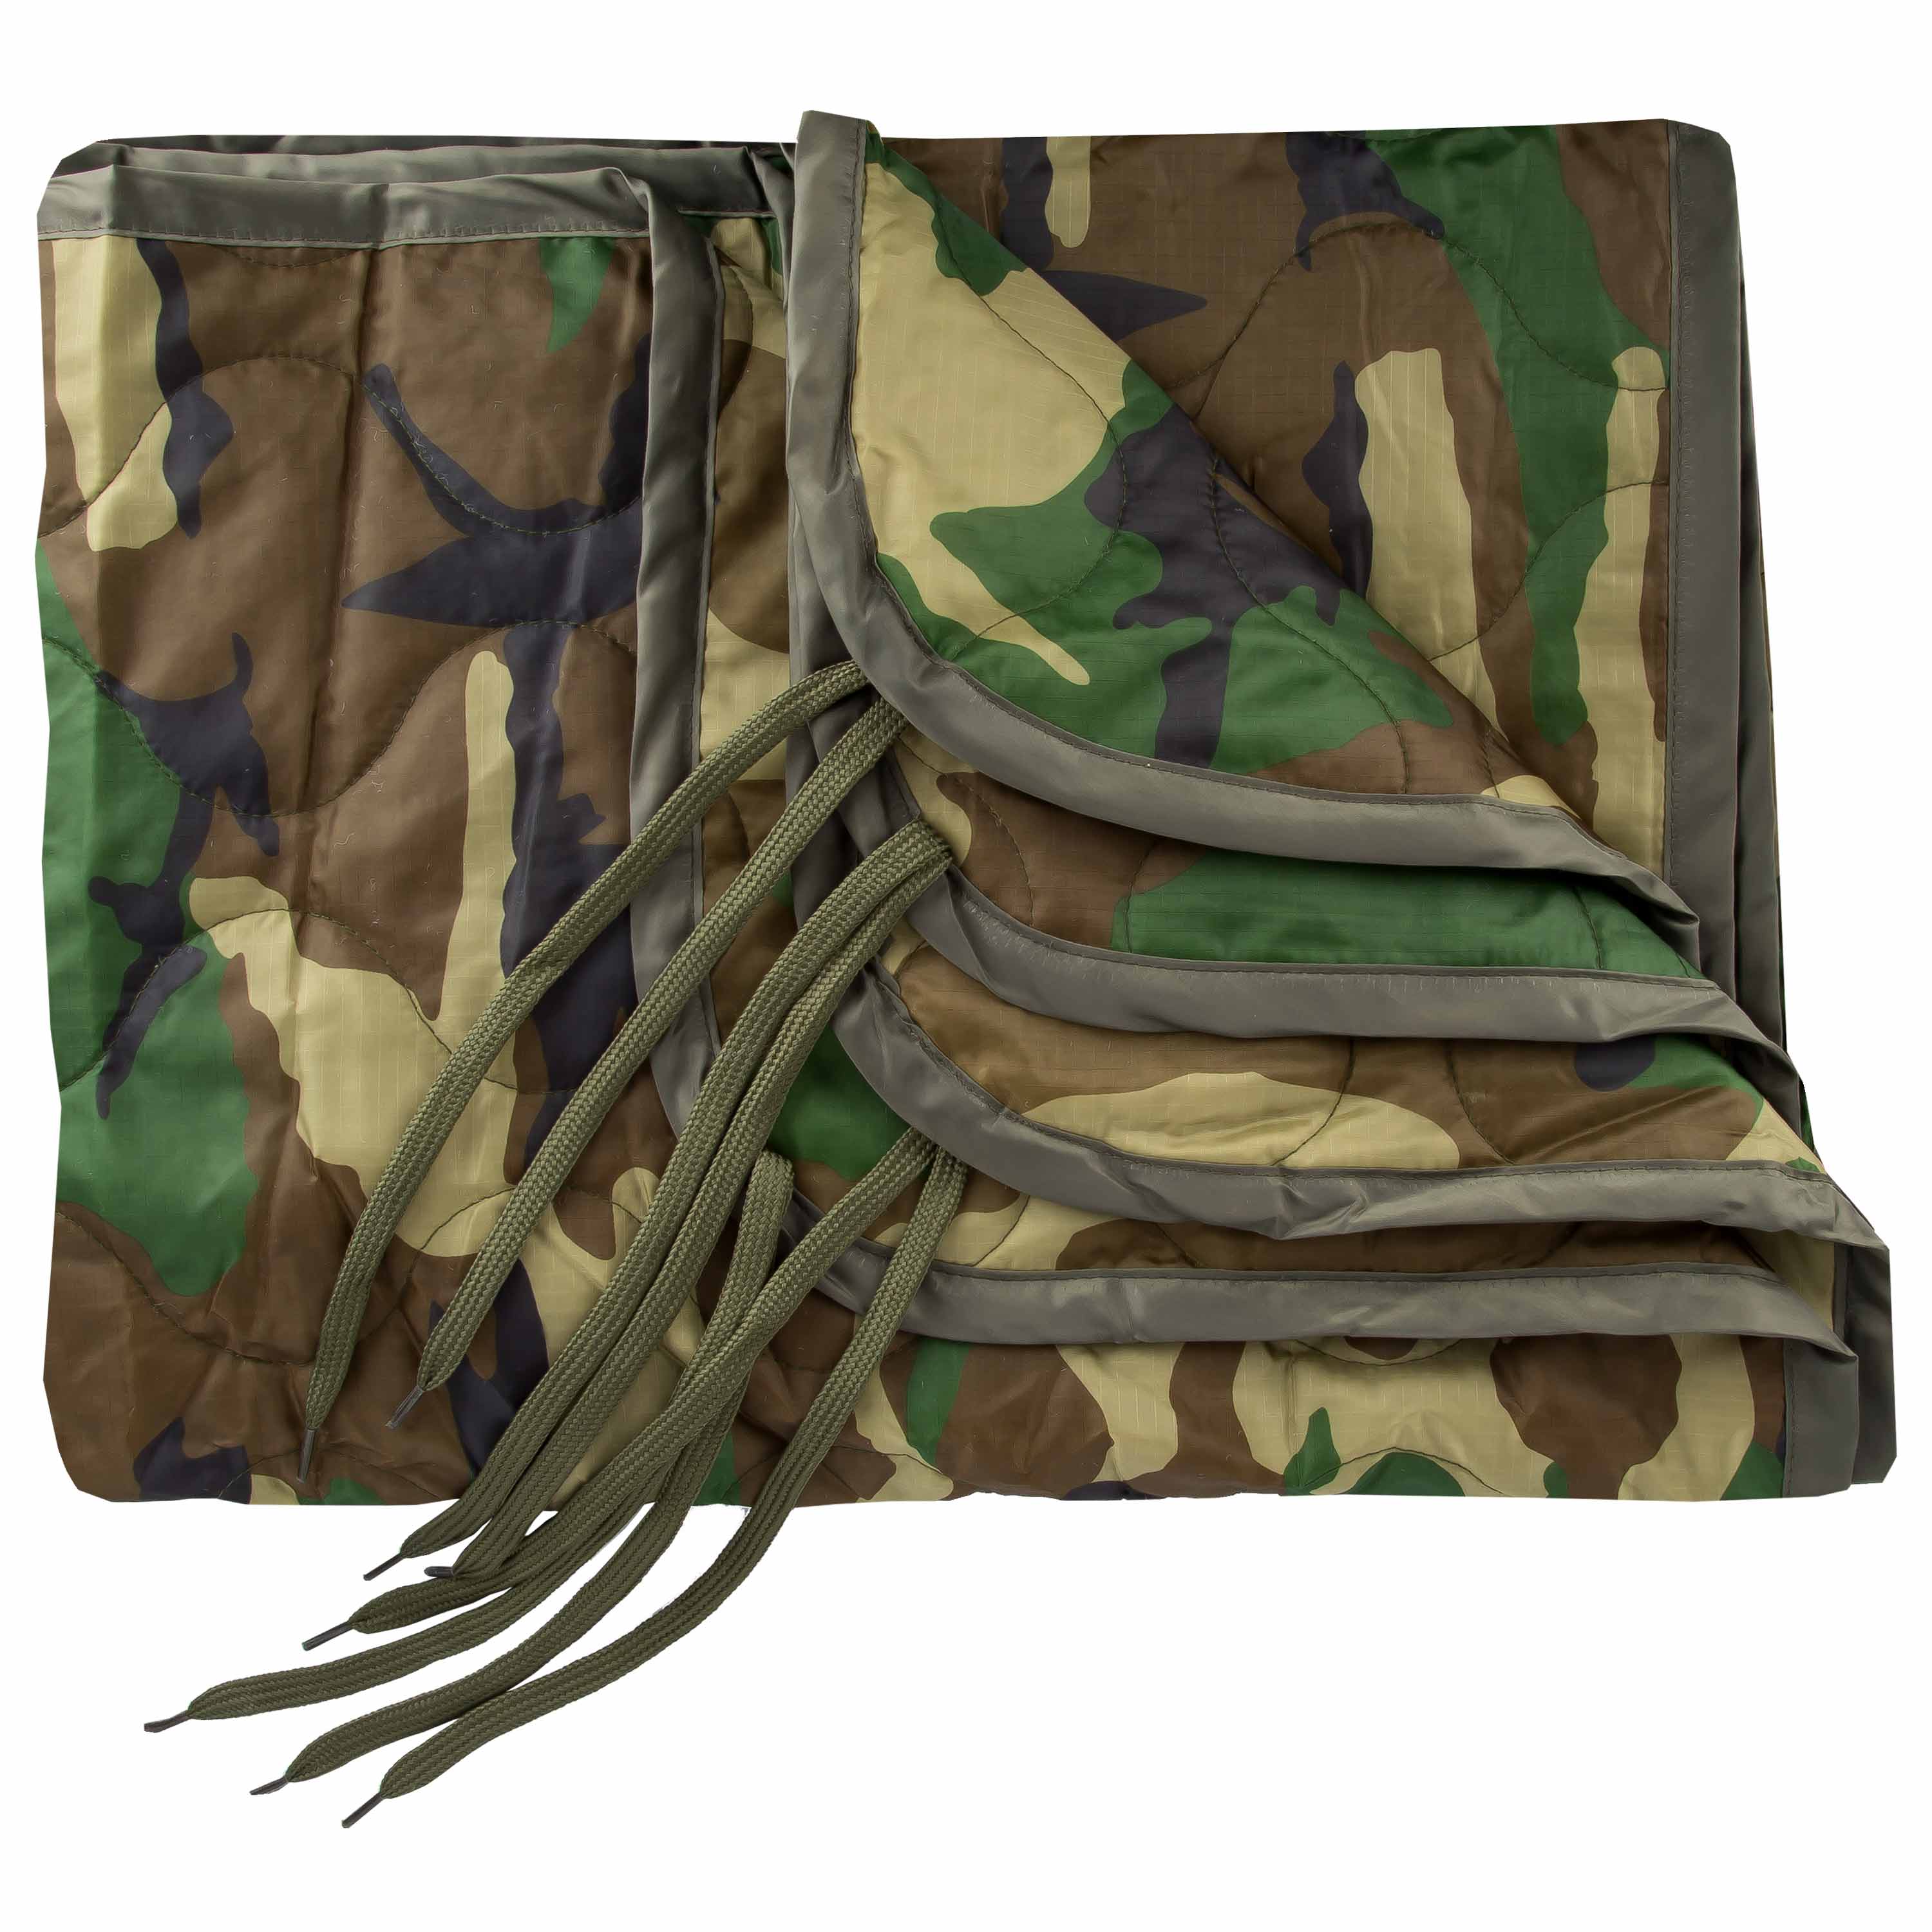 Woobie Liner Poncho Blanket Decke Steppdecke Outdoor cce woodland camouflage 